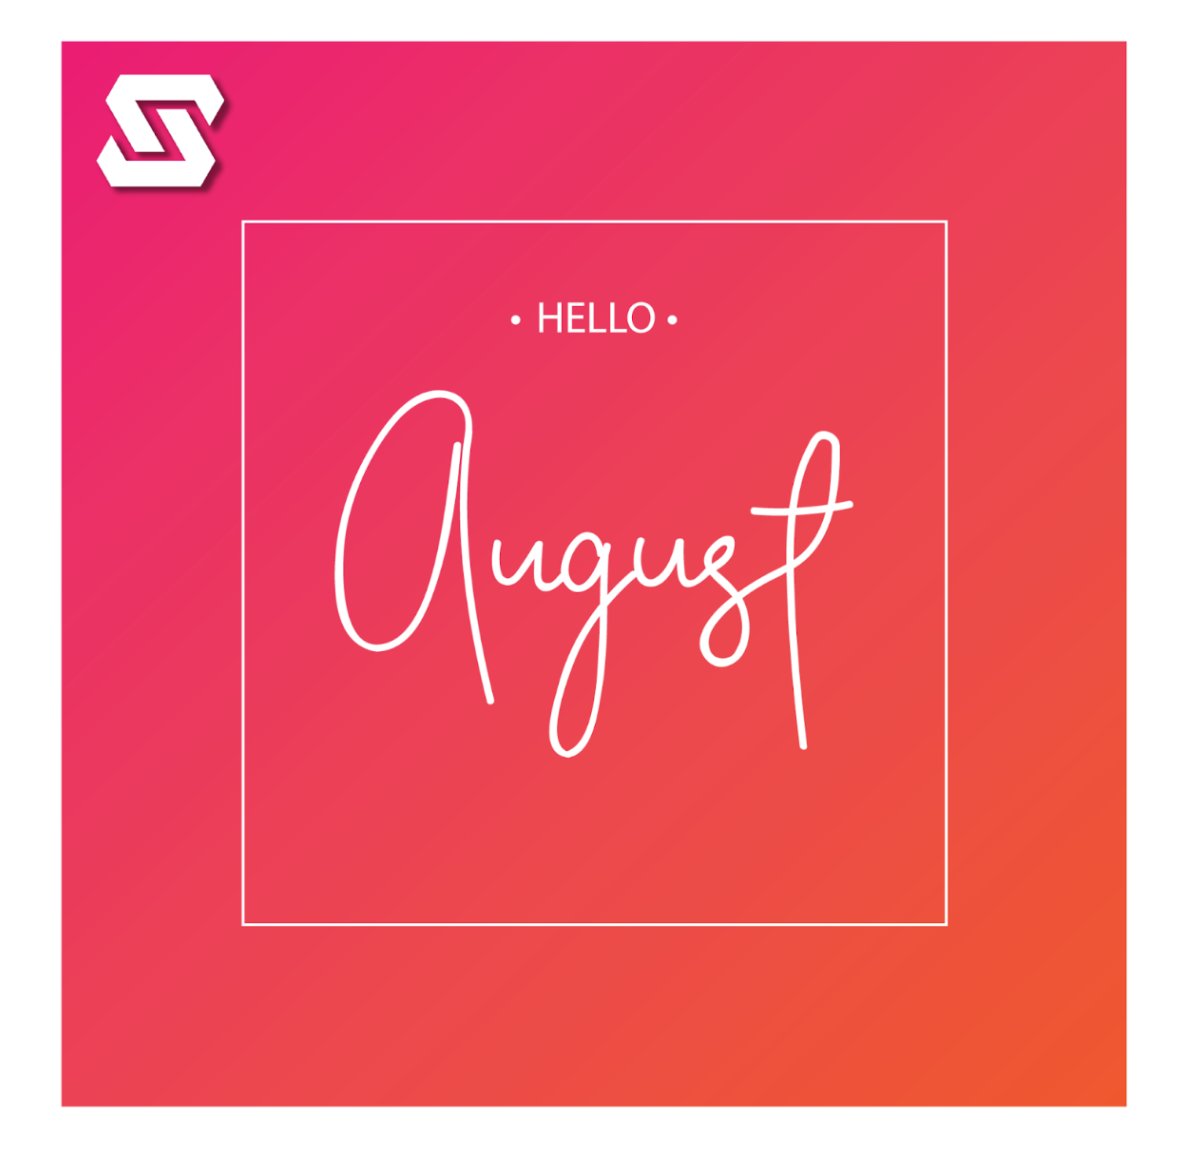 Getting that August-y feeling!

#HelloAugust #August #Summer #ShilohTechnologies #NorthwestArkansas #RogersArkansas #SummerFun #GoodbyeJuly